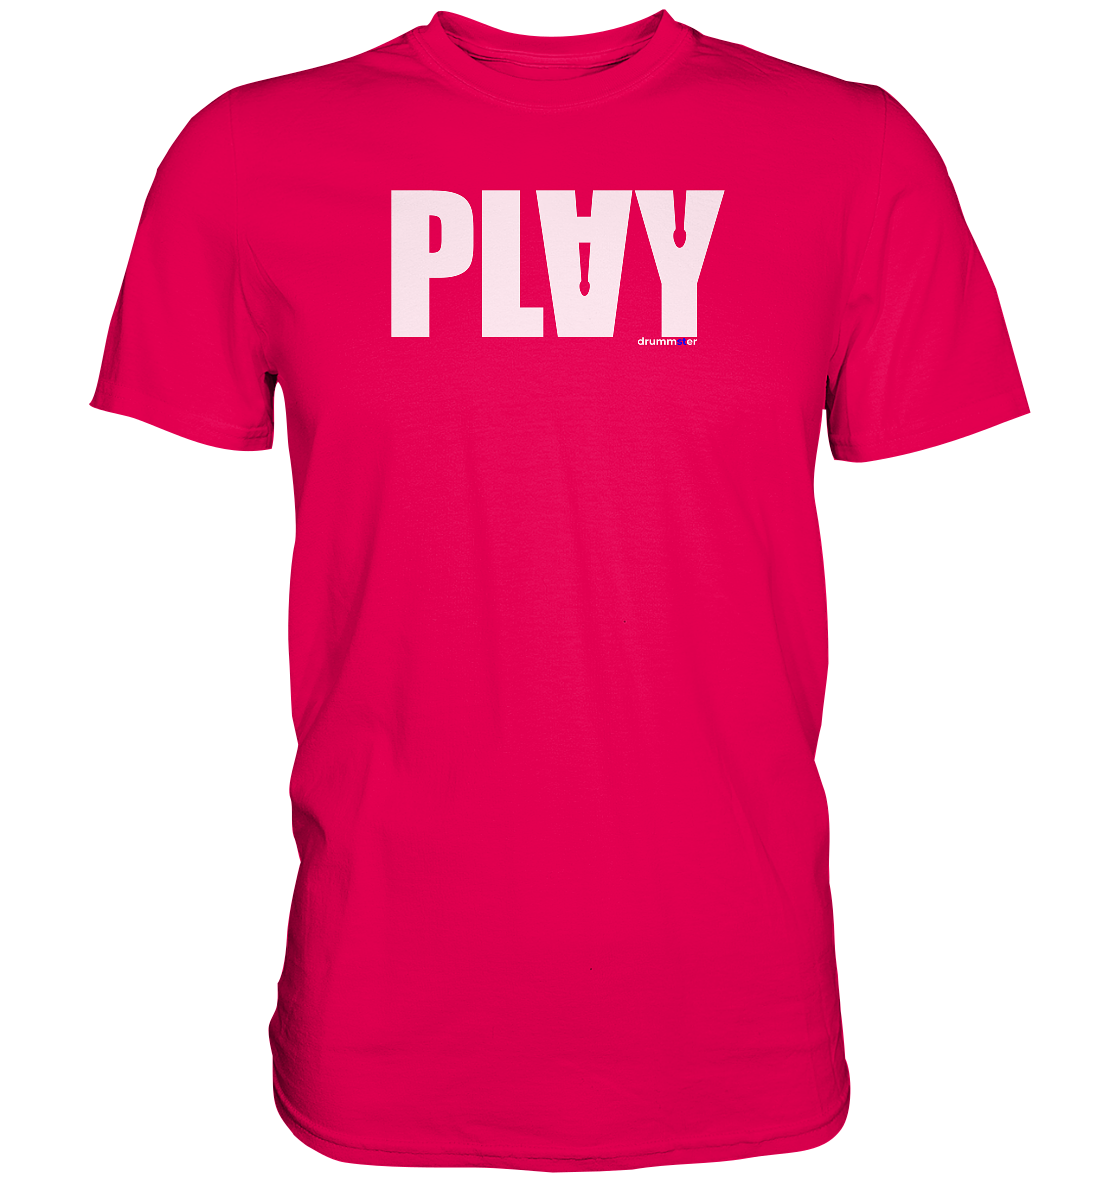 play v2 - unisex shirt | various colors